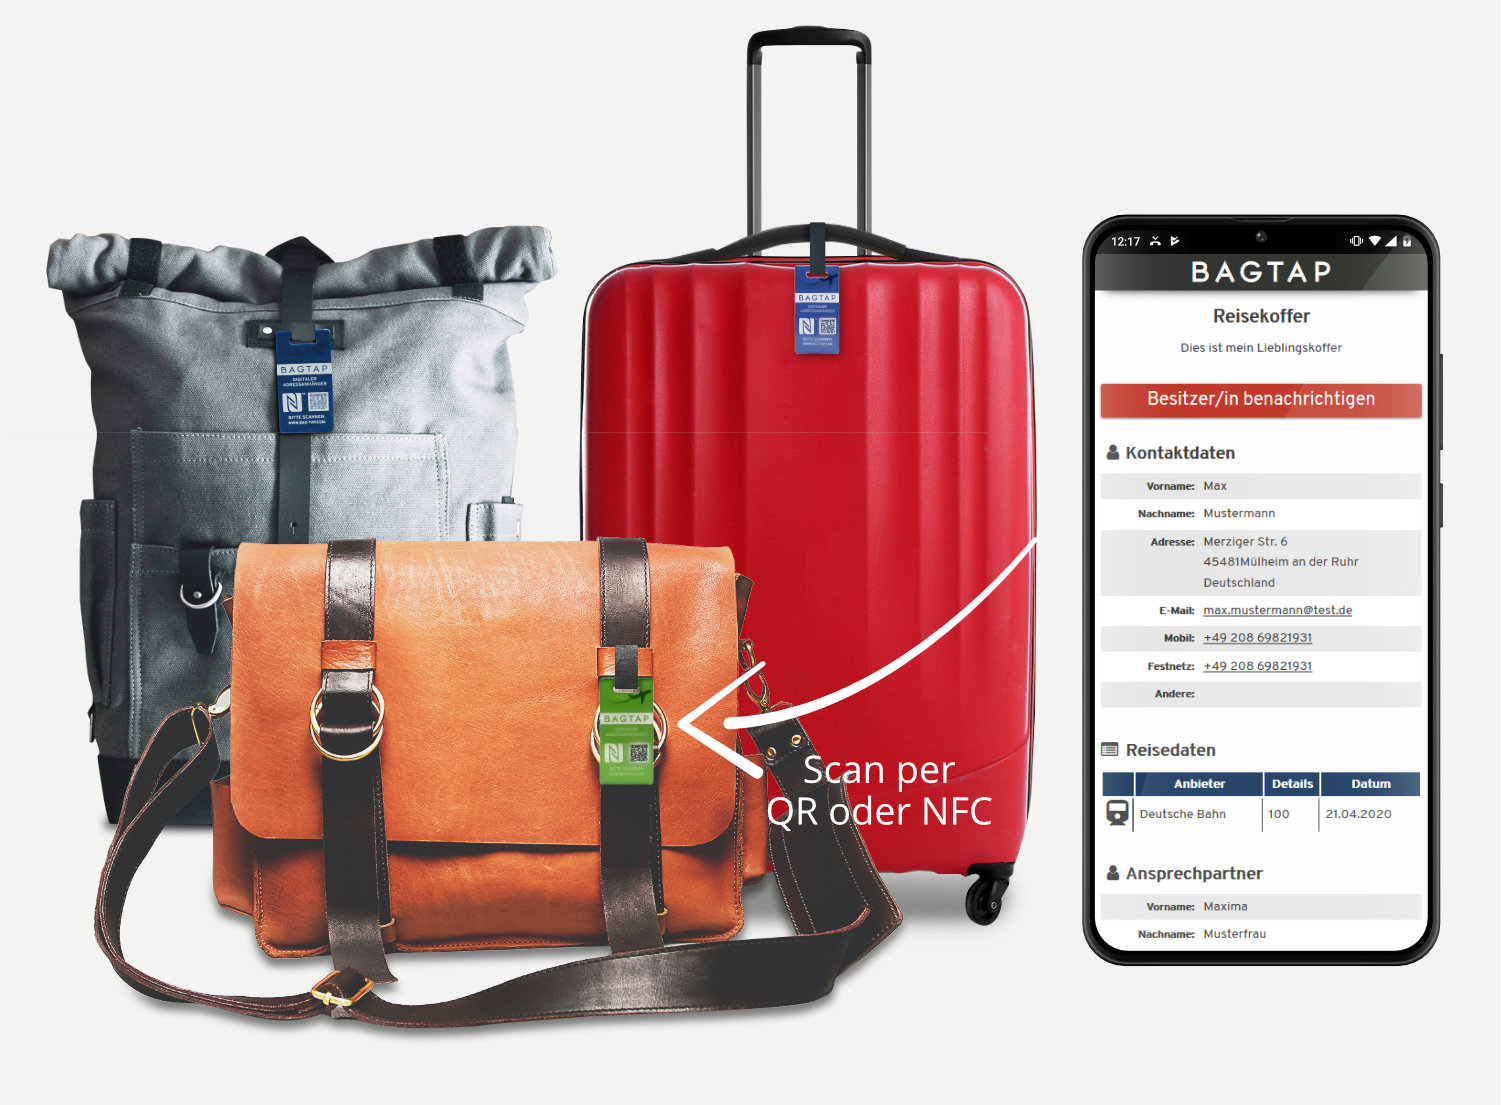 Bagtap - the digital luggage tag